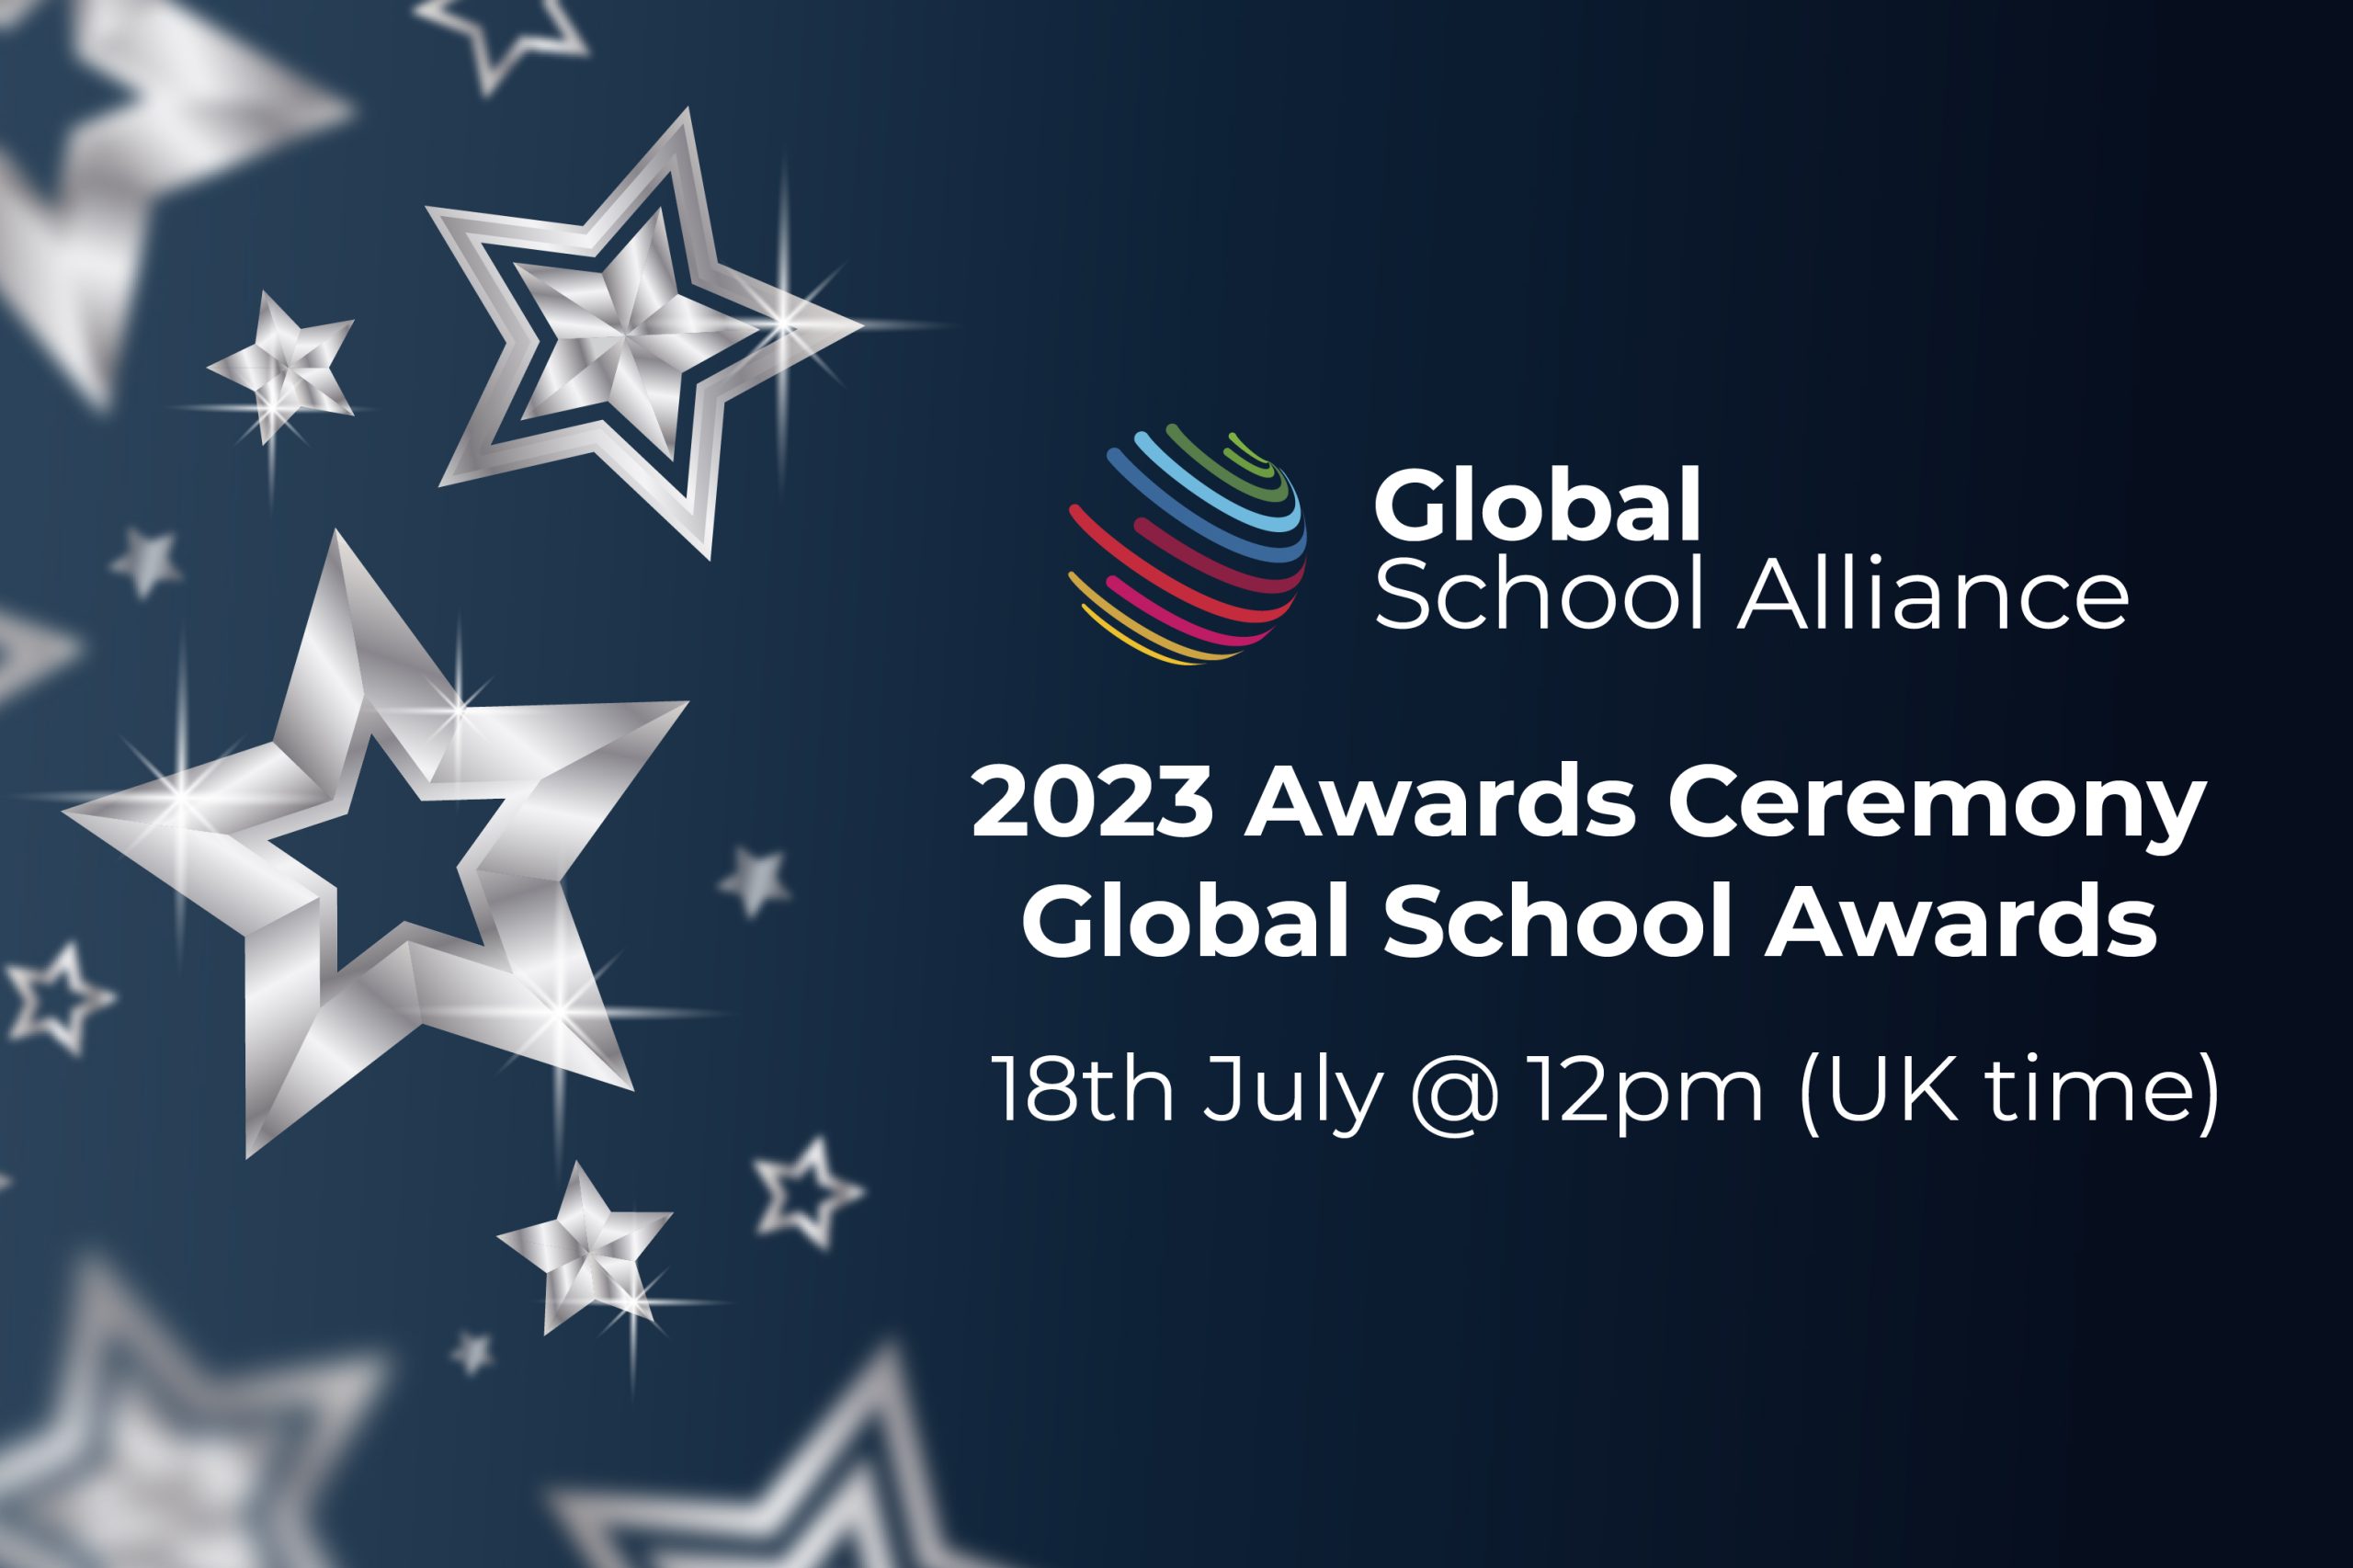 Celebrating and awarding globally-minded schools